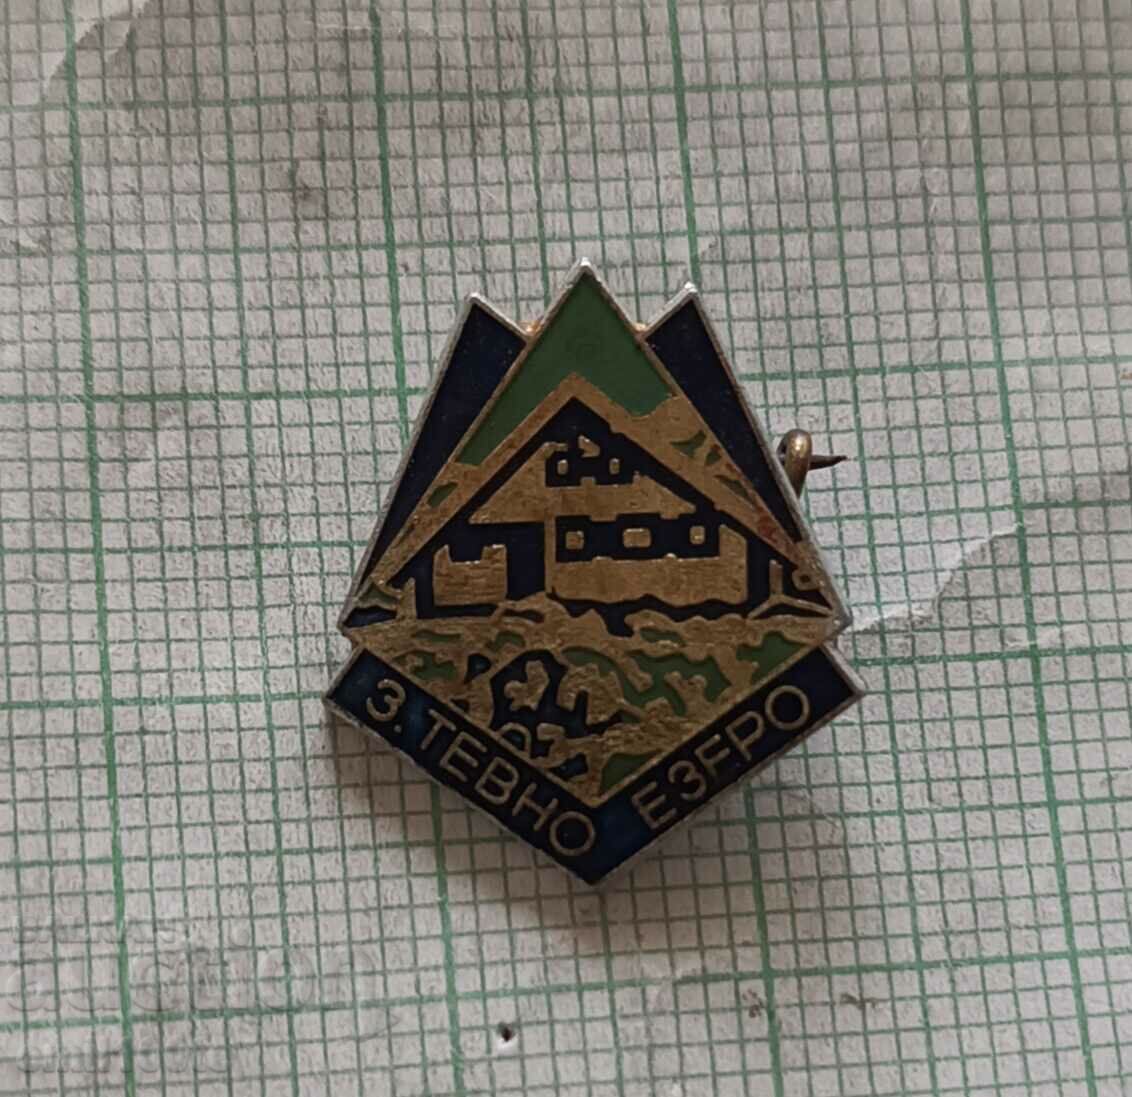 Tevno lake shelter badge